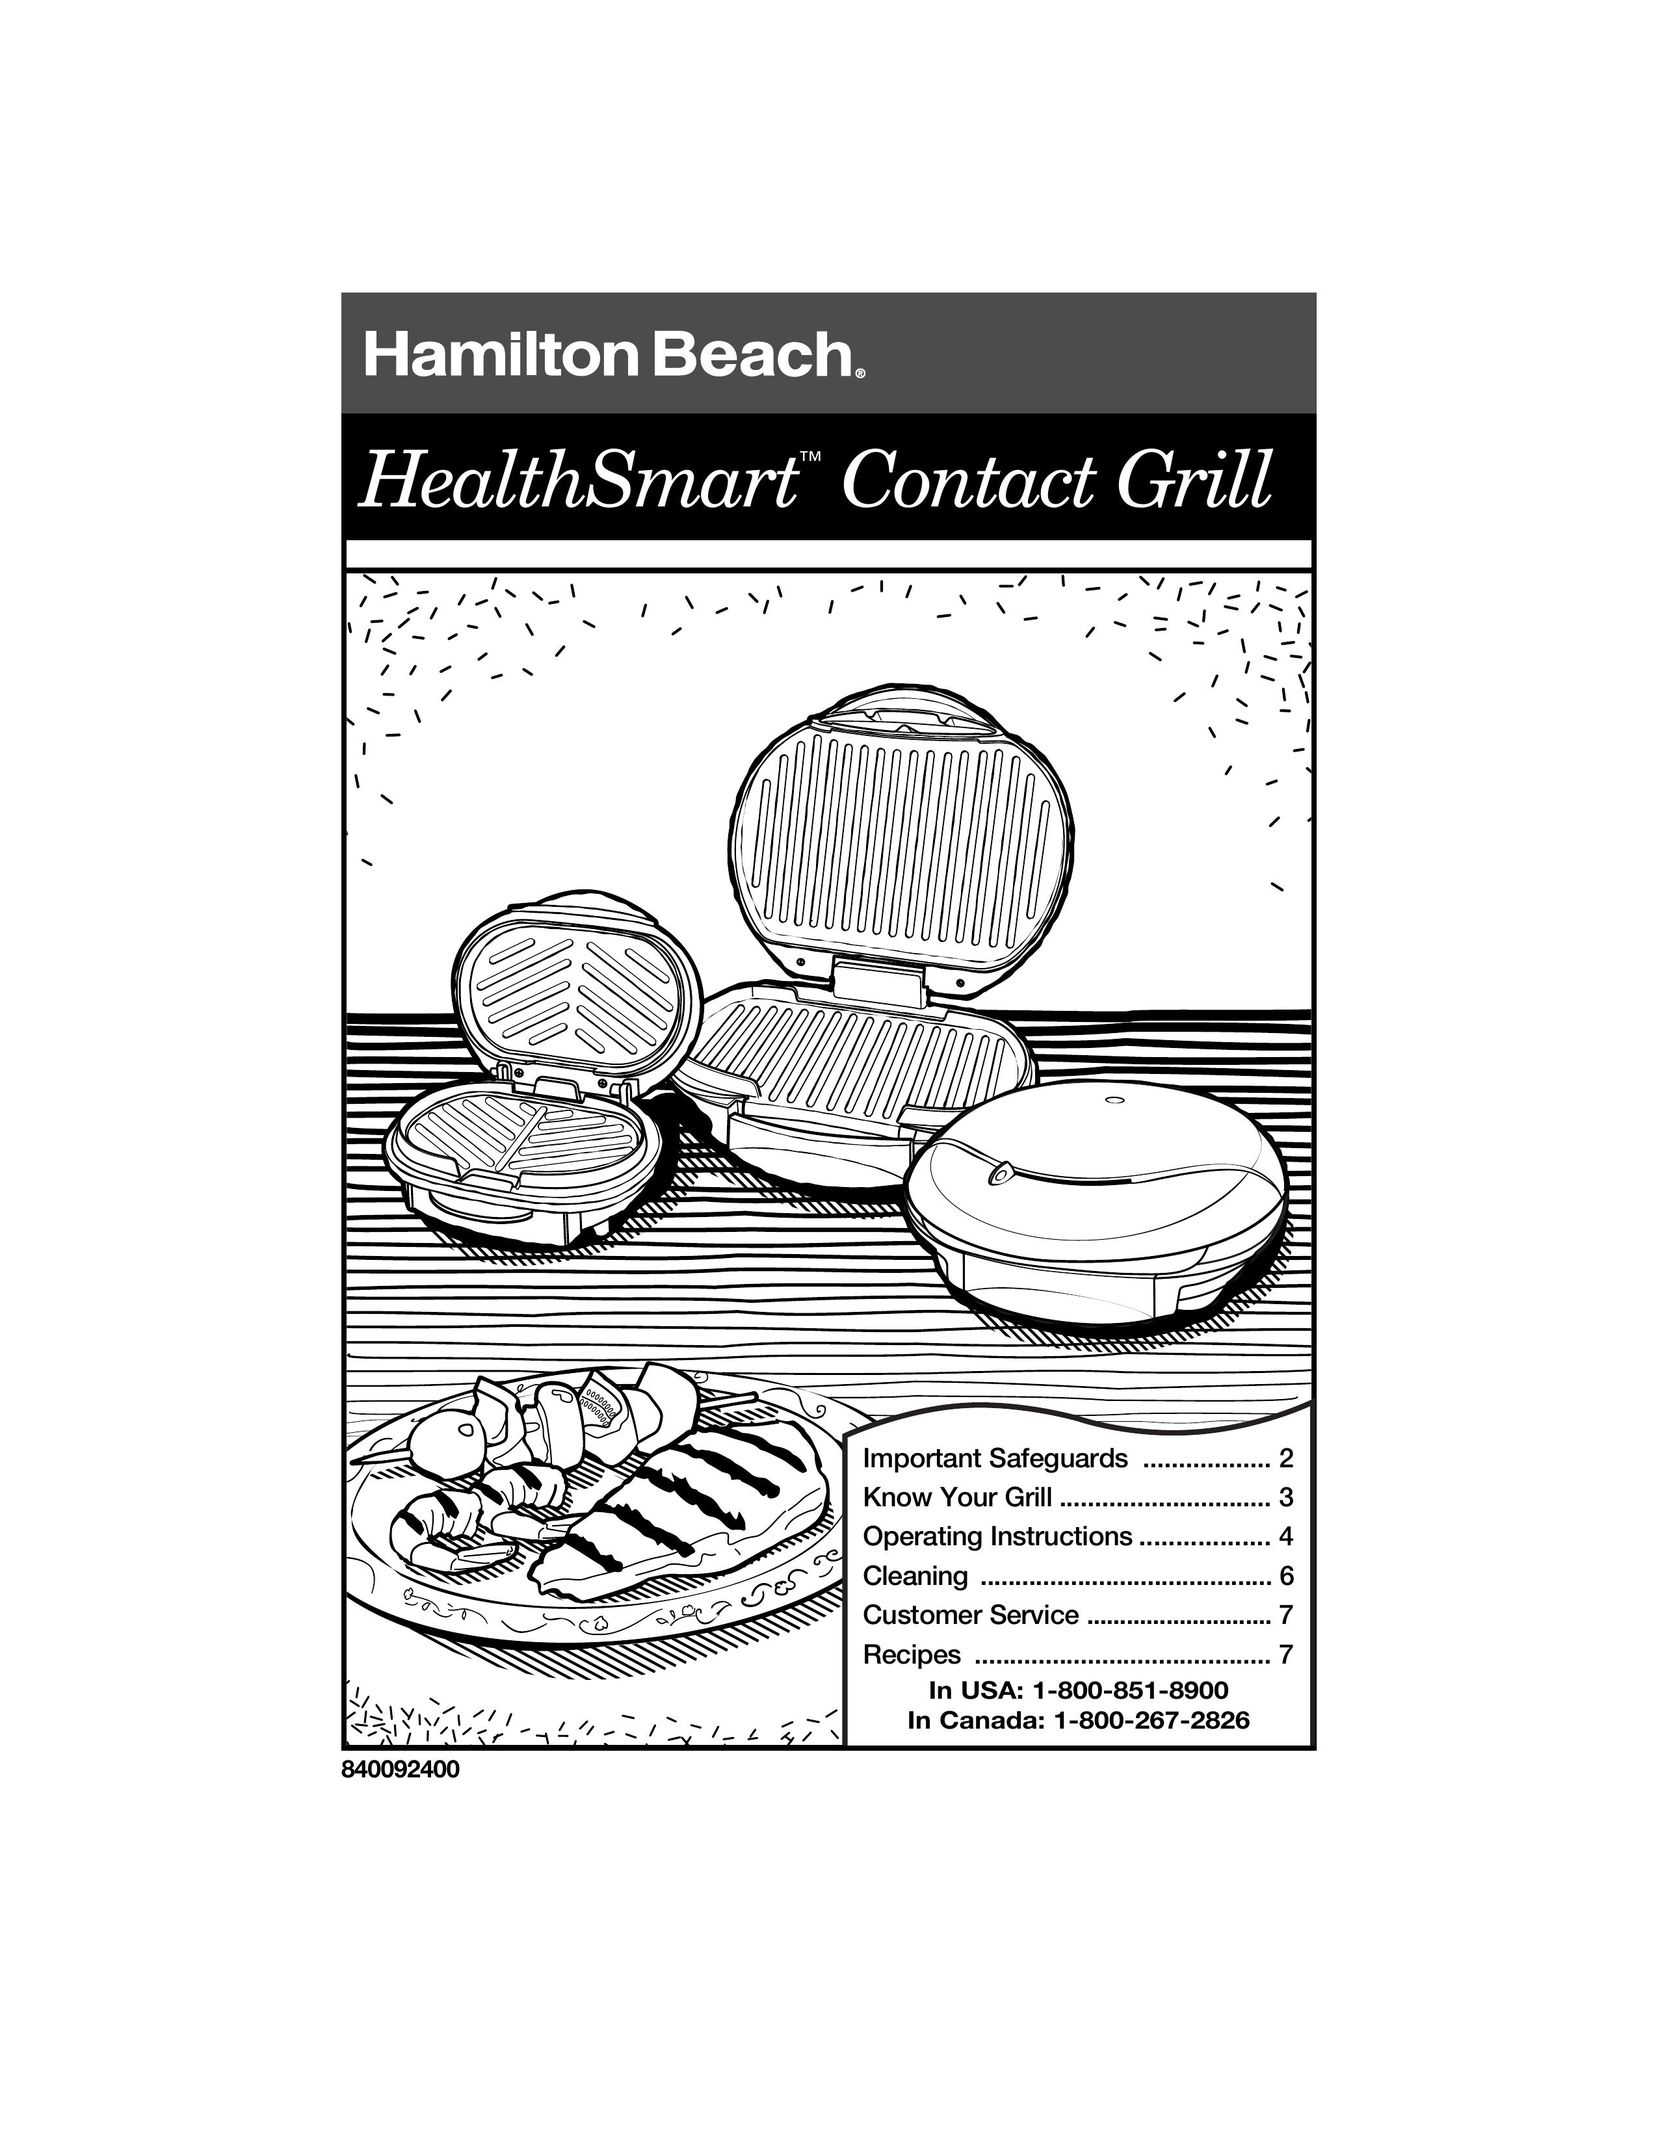 Hamilton Beach 840092400 Kitchen Grill User Manual